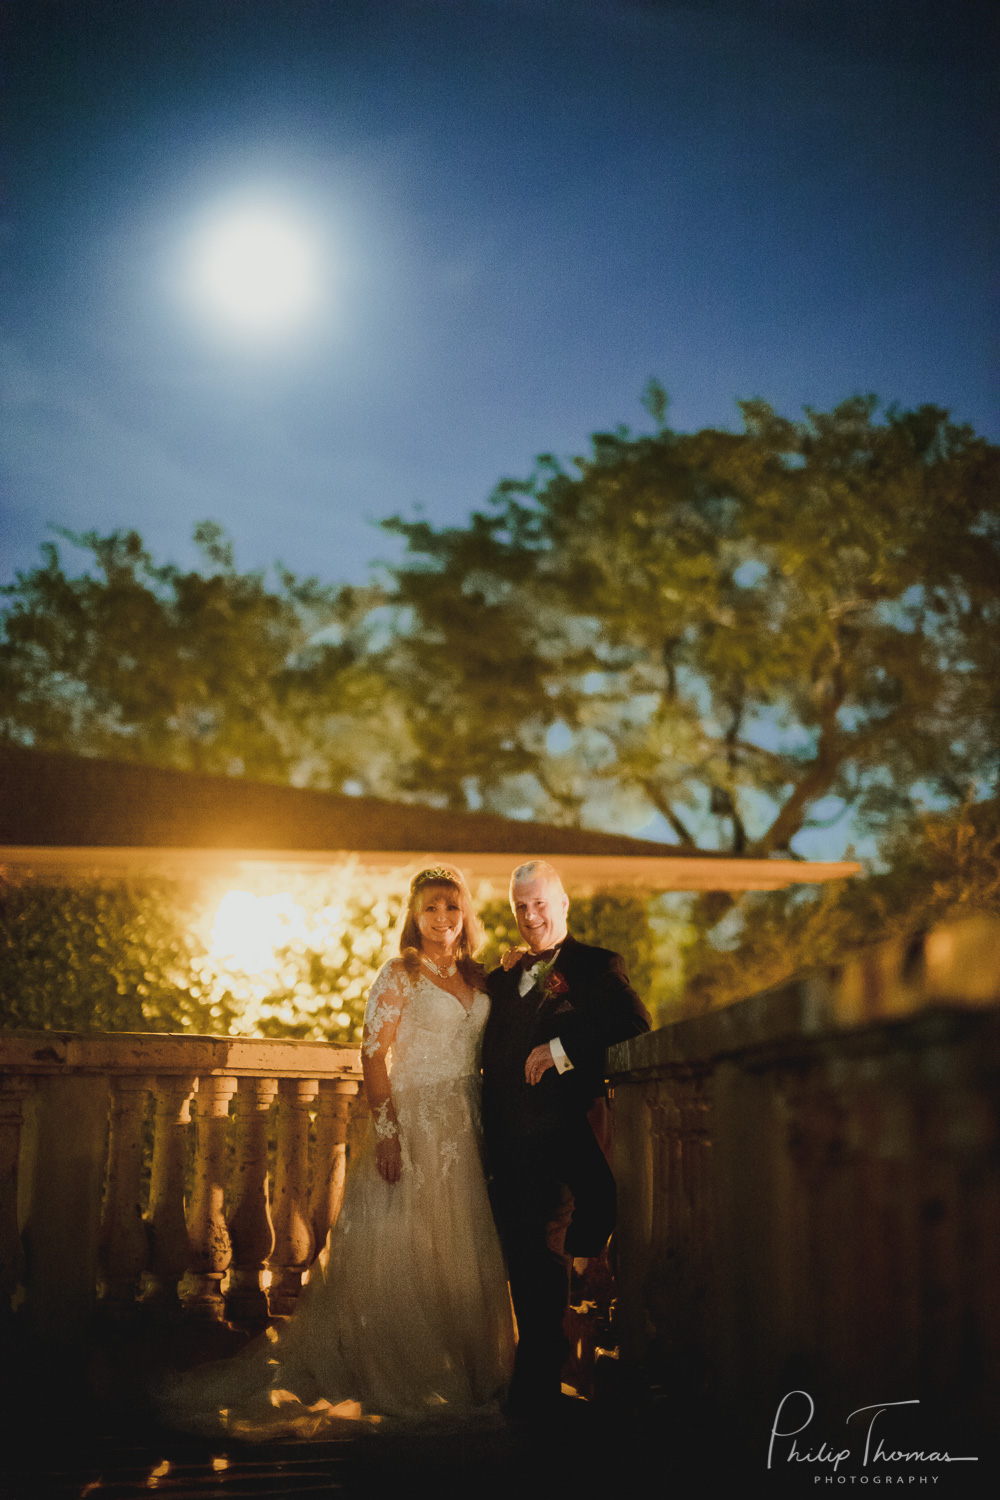 The Gallery Houston Wedding - Philip Thomas Photography-24